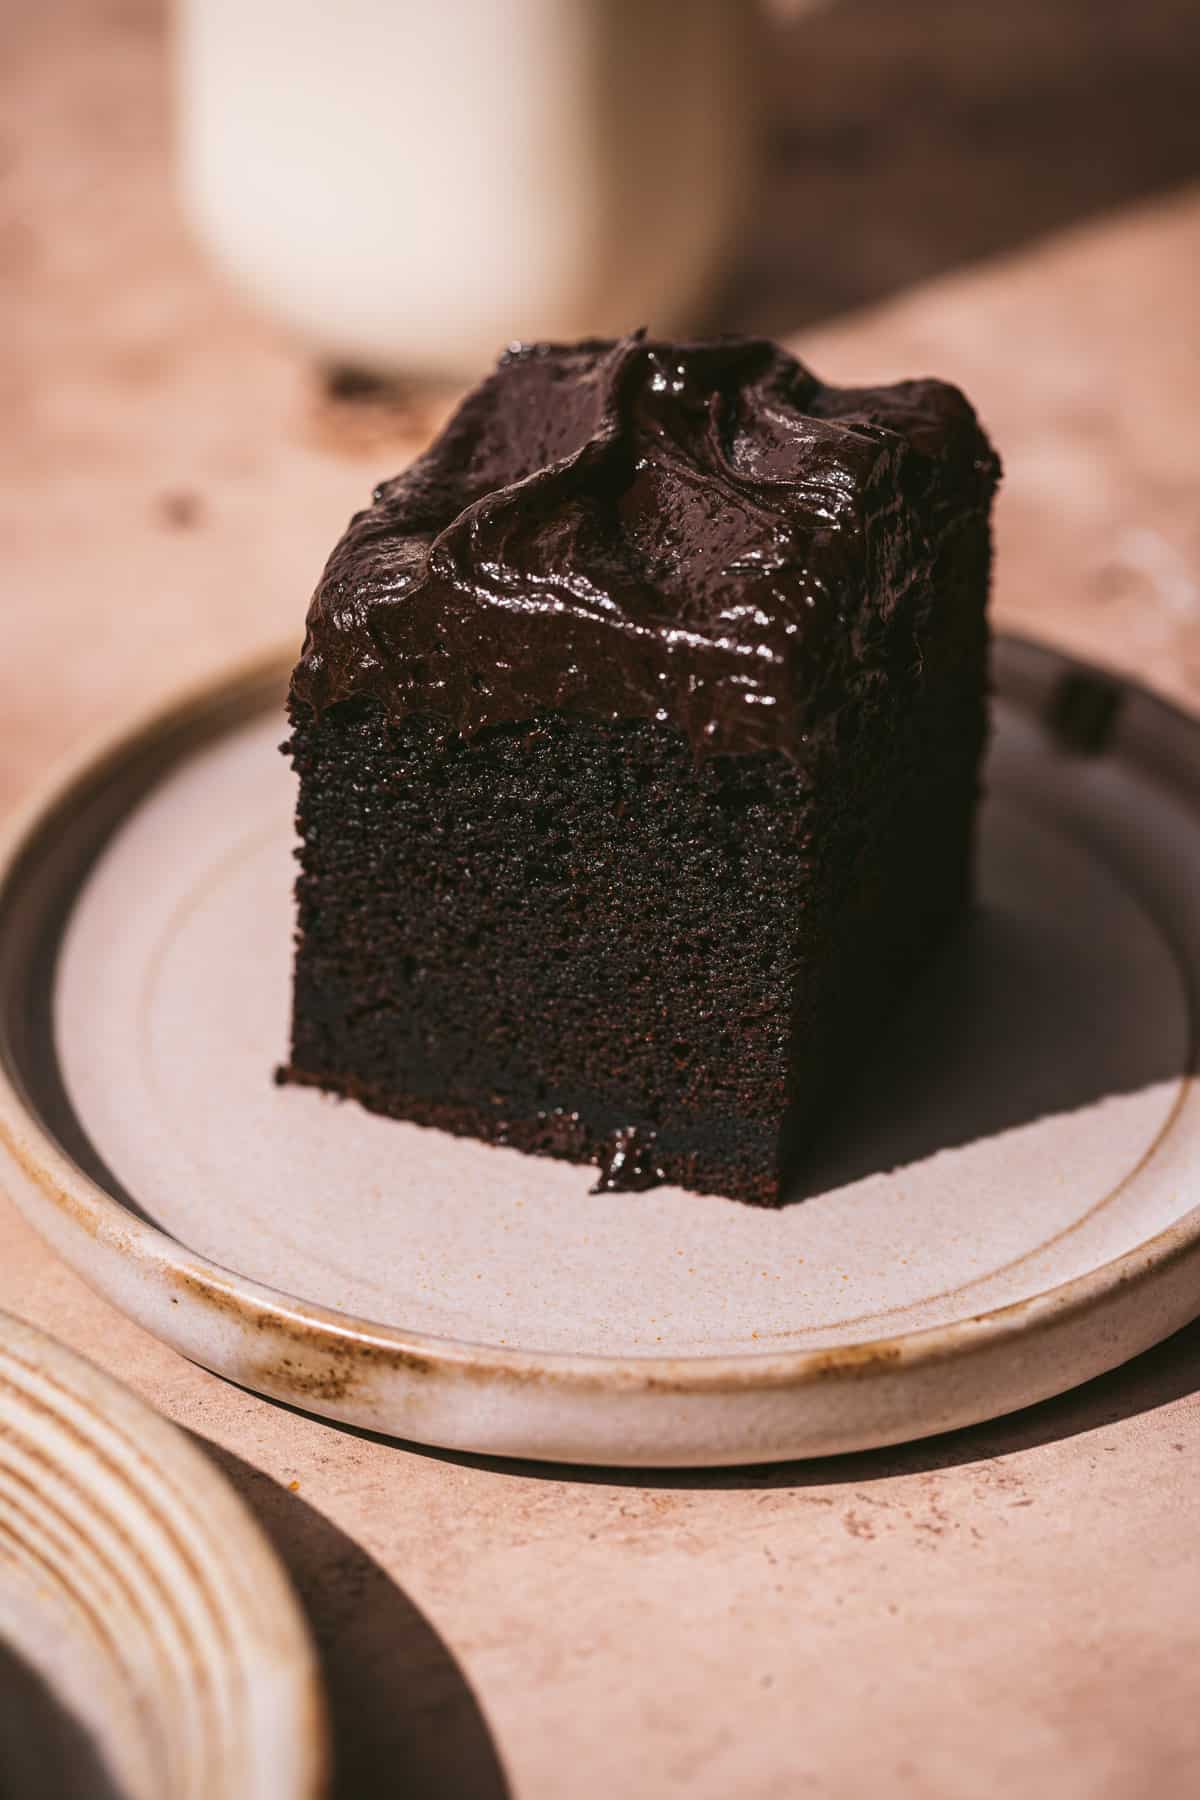 one piece of chocolate malt cake on plate.